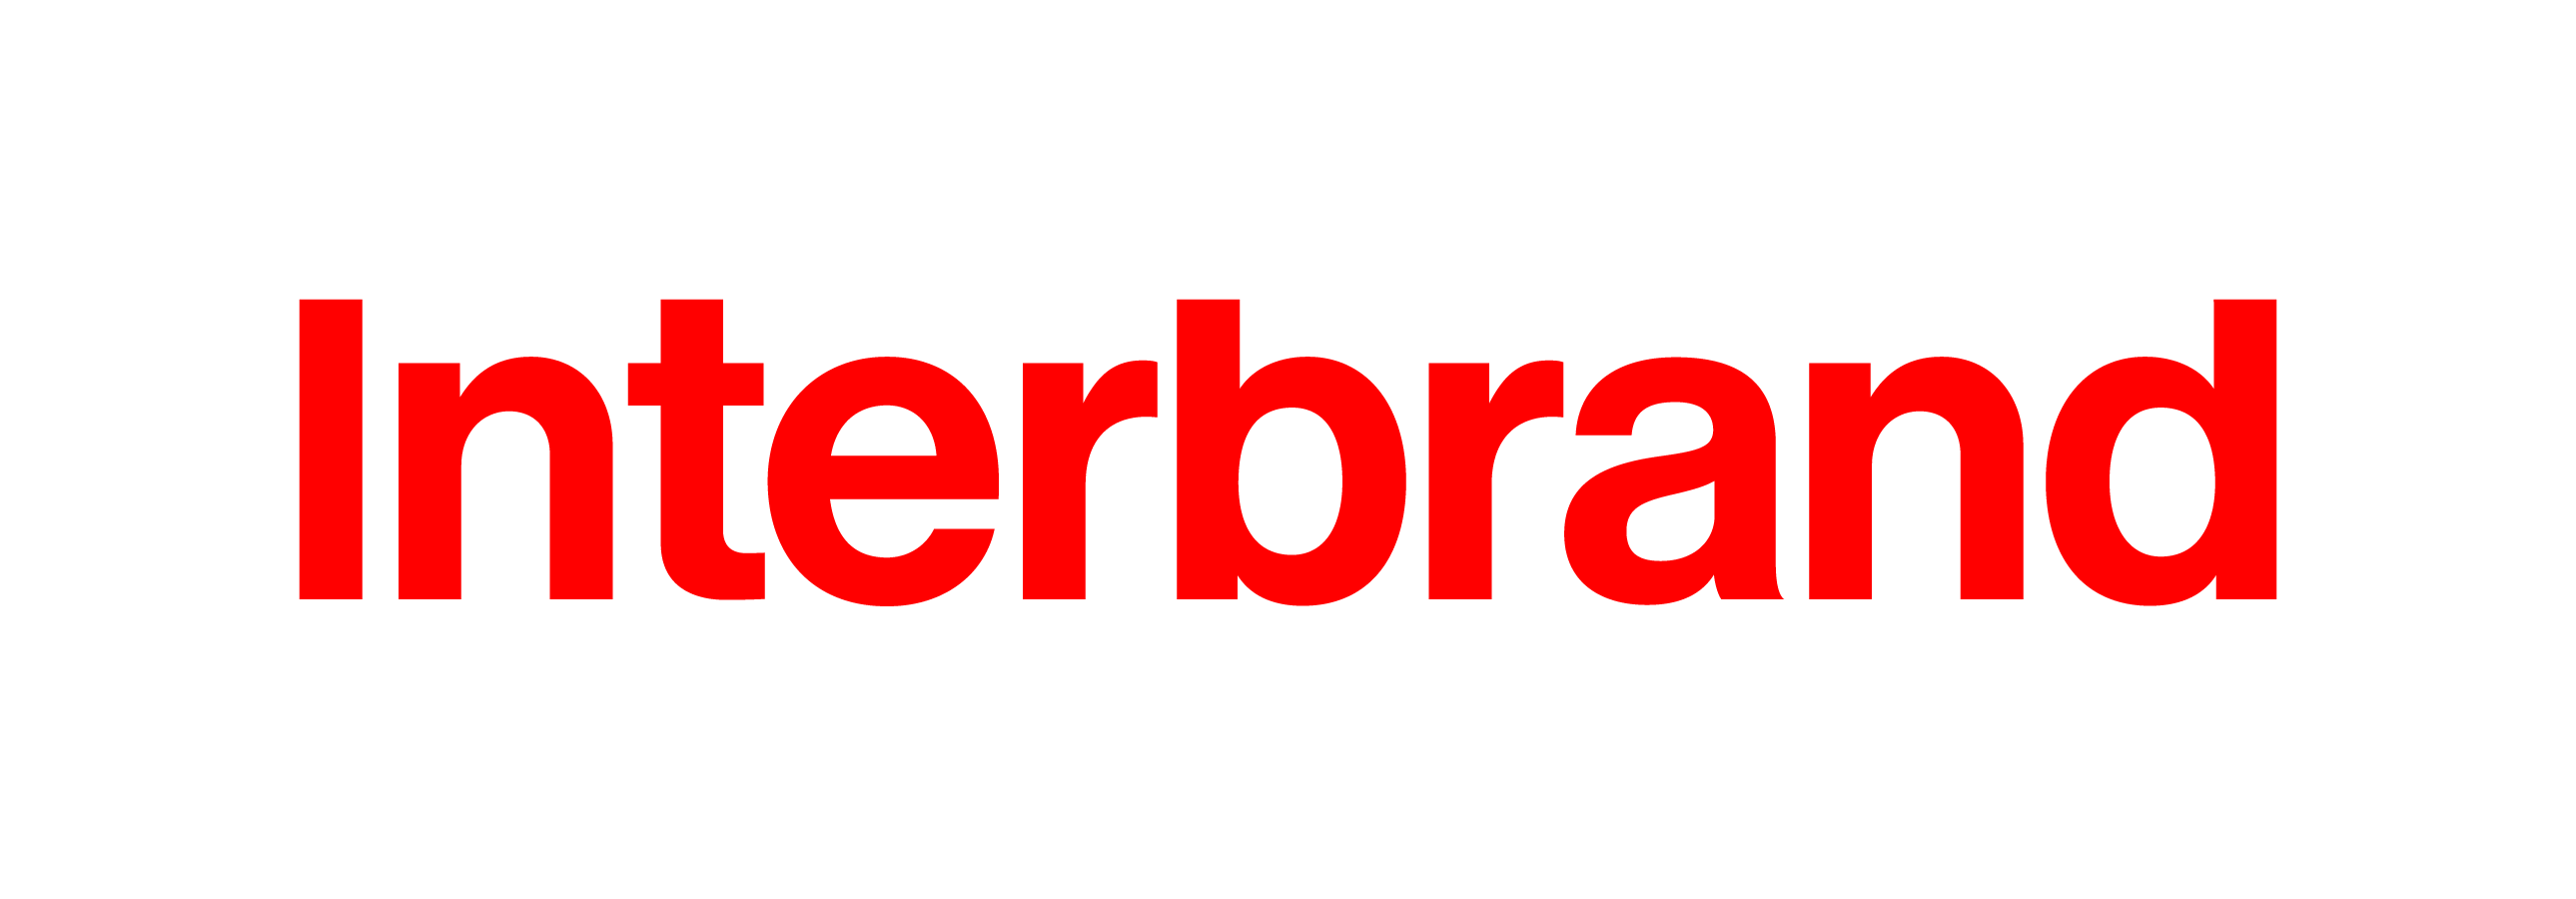 Interbrand logo red 1